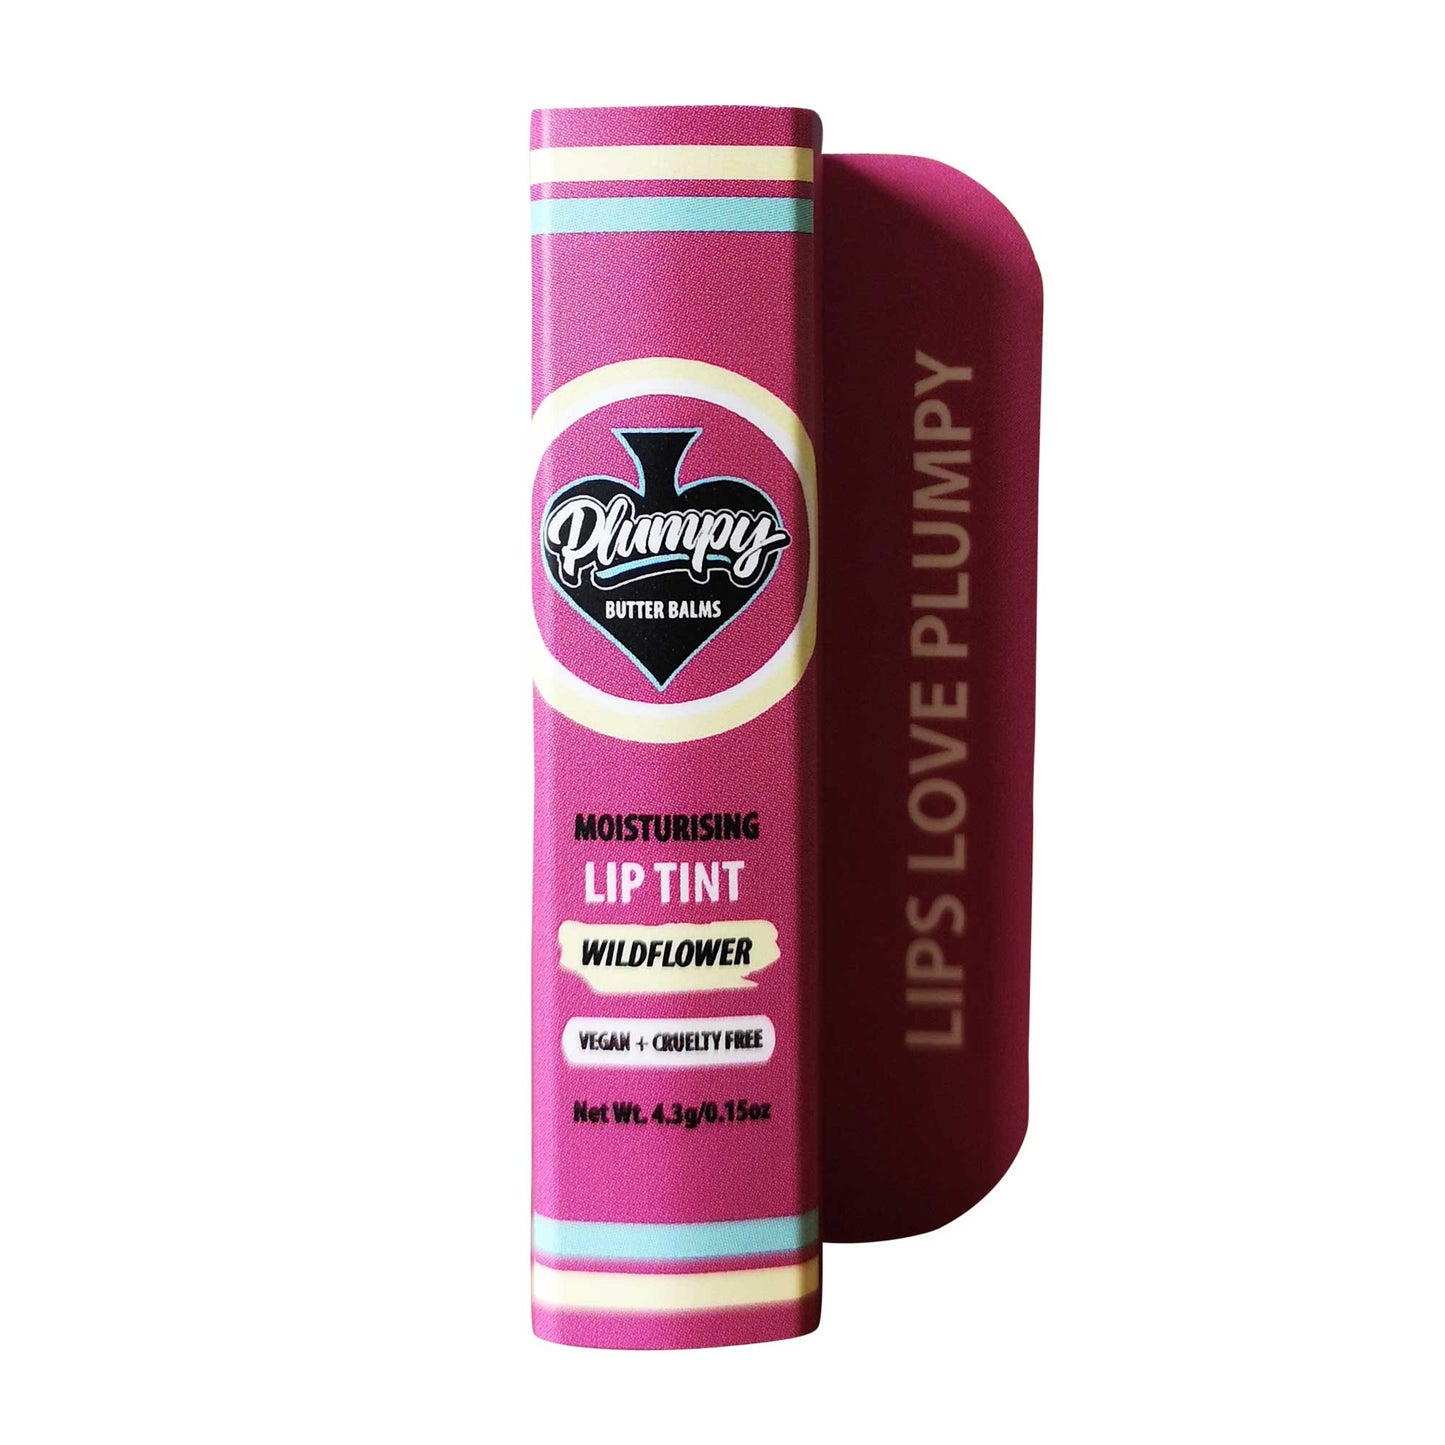 Plumpy Balms Wildflower berry shade lip tint